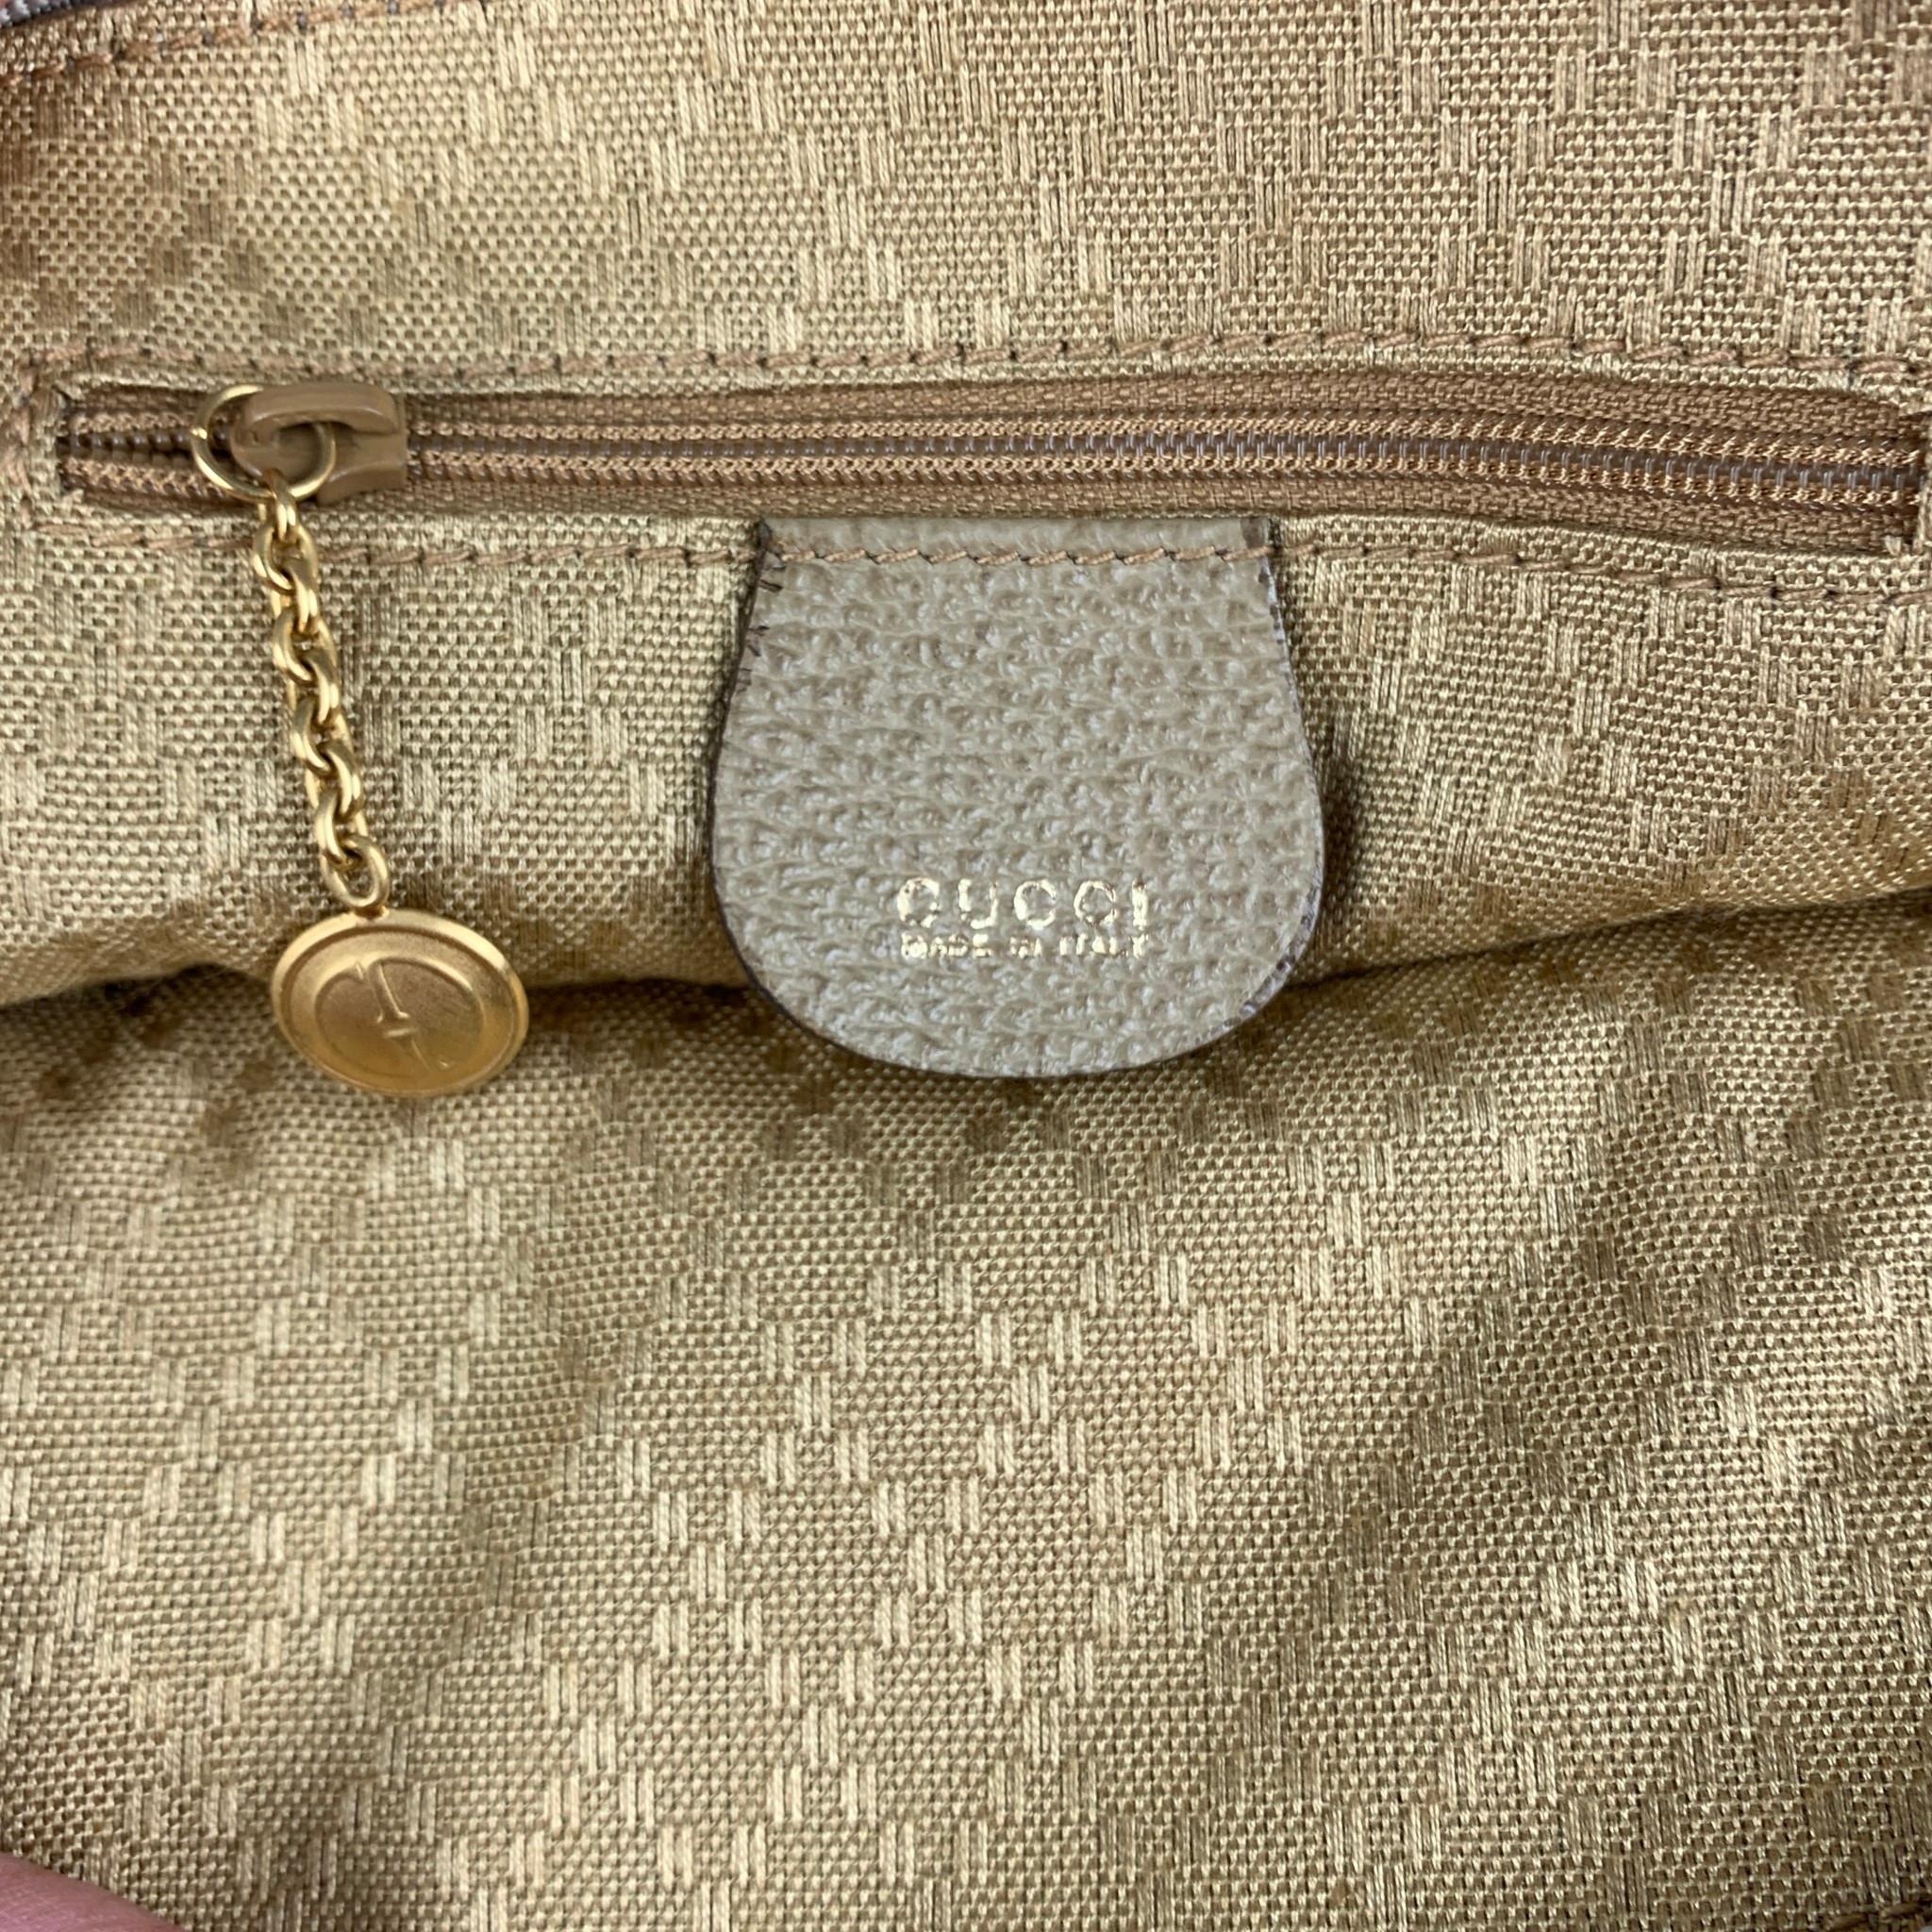 GUCCI Vintage Beige Suede Leather Mini Handbag 2